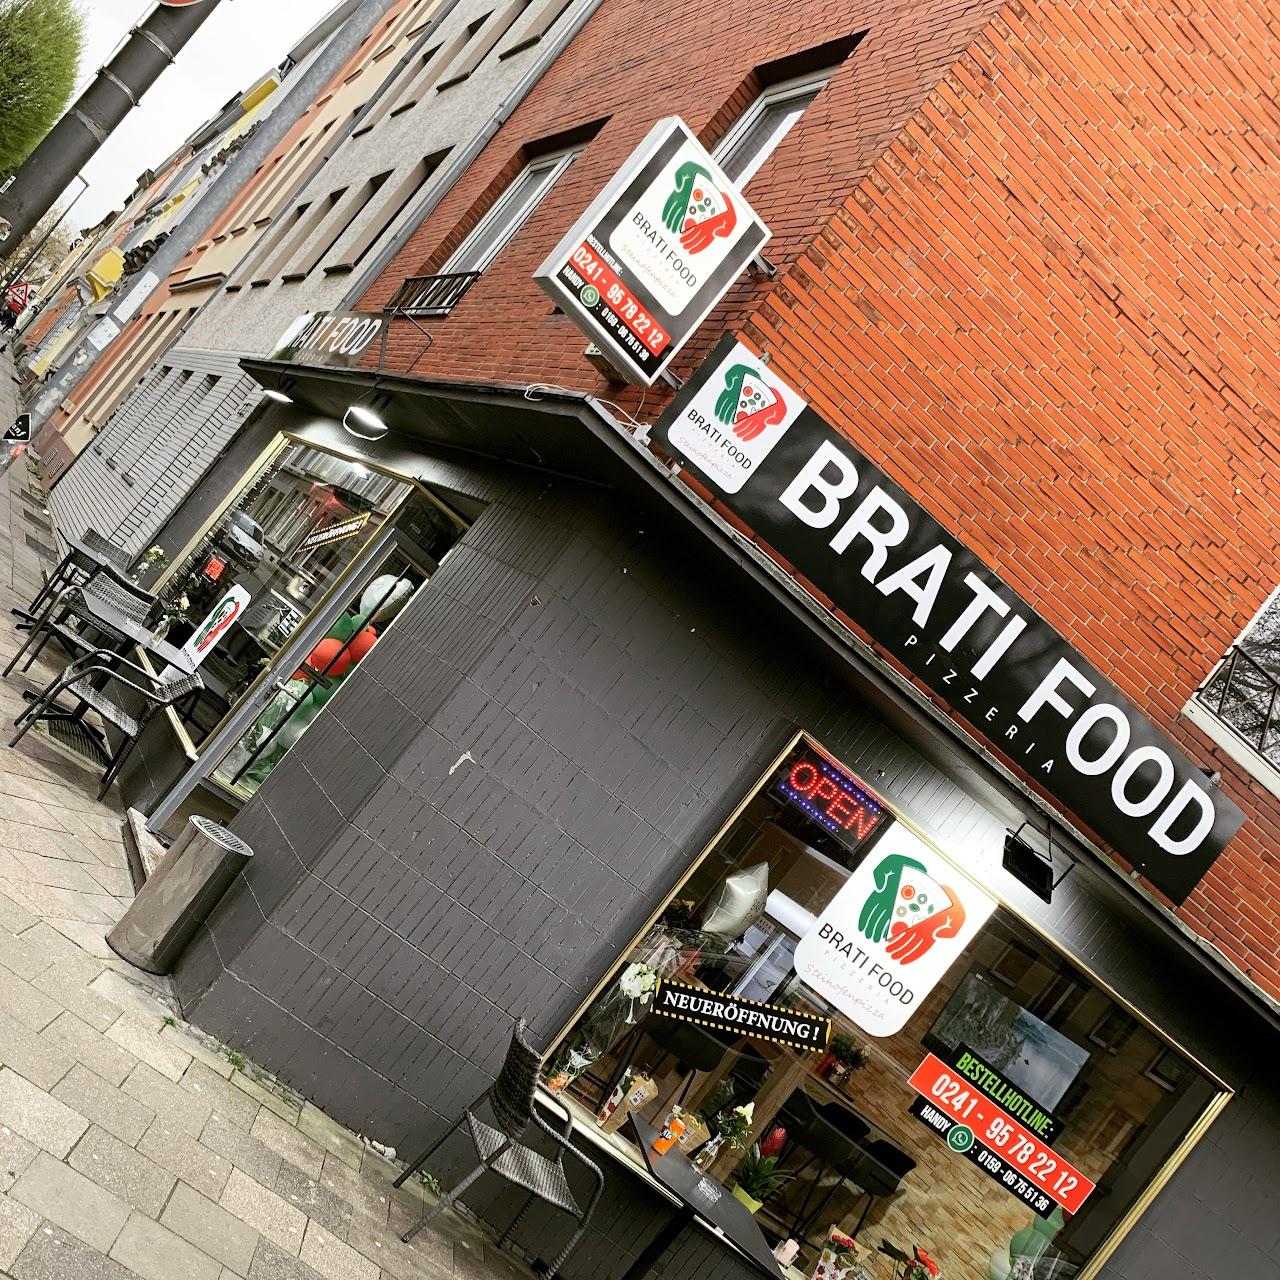 Restaurant "Brati Food Pizzeria" in Aachen